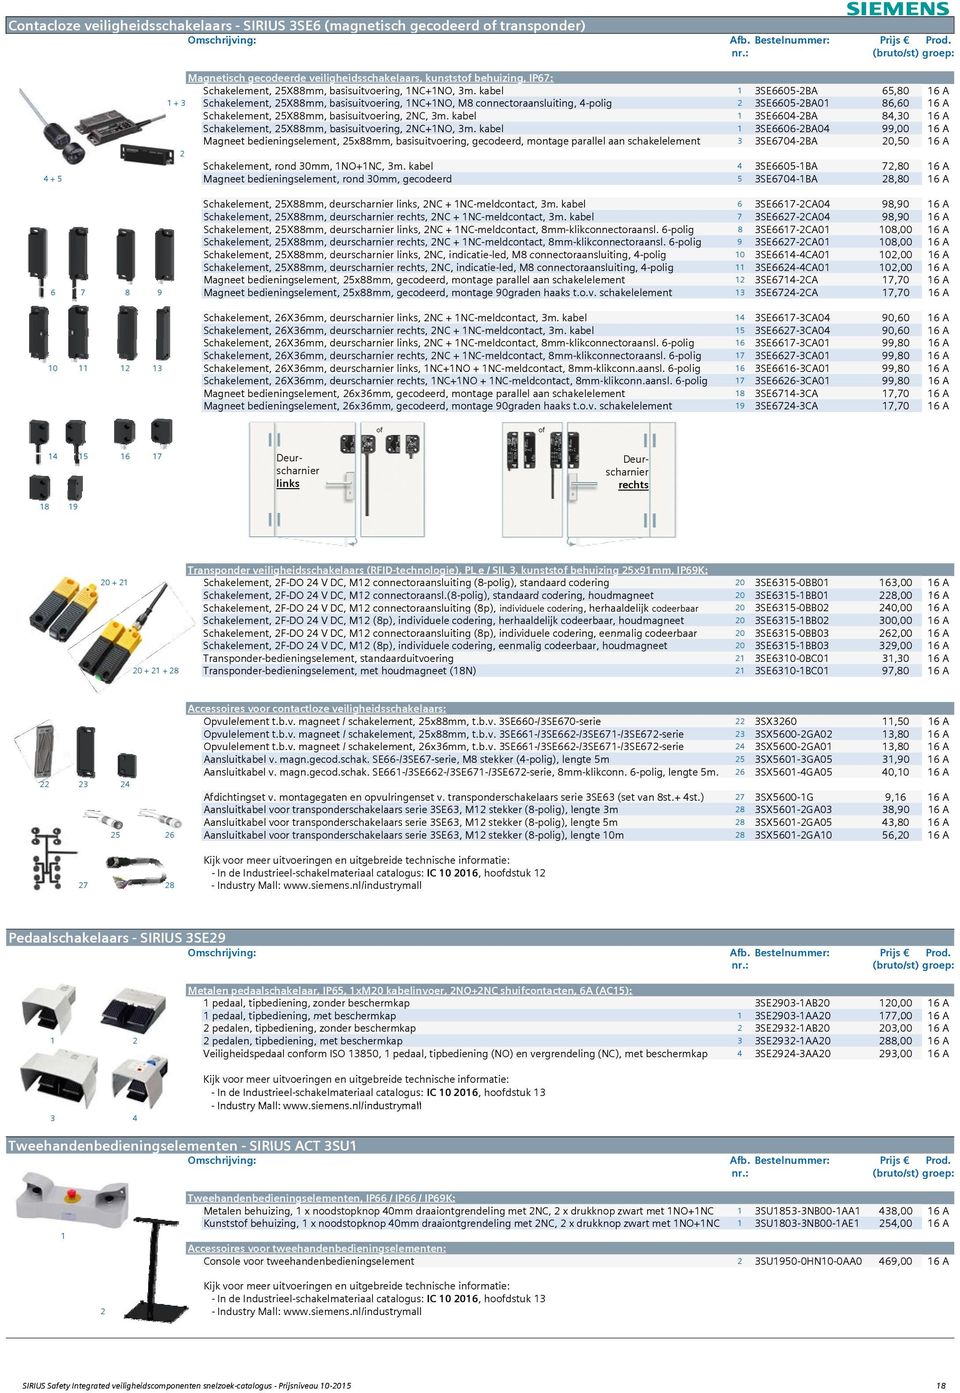 kabel 1 3SE6605-2BA 65,80 16 A 1 + 3 Schakelement, 25X88mm, basisuitvoering, 1NC+1NO, M8 connectoraansluiting, 4-polig 2 3SE6605-2BA01 86,60 16 A Schakelement, 25X88mm, basisuitvoering, 2NC, 3m.